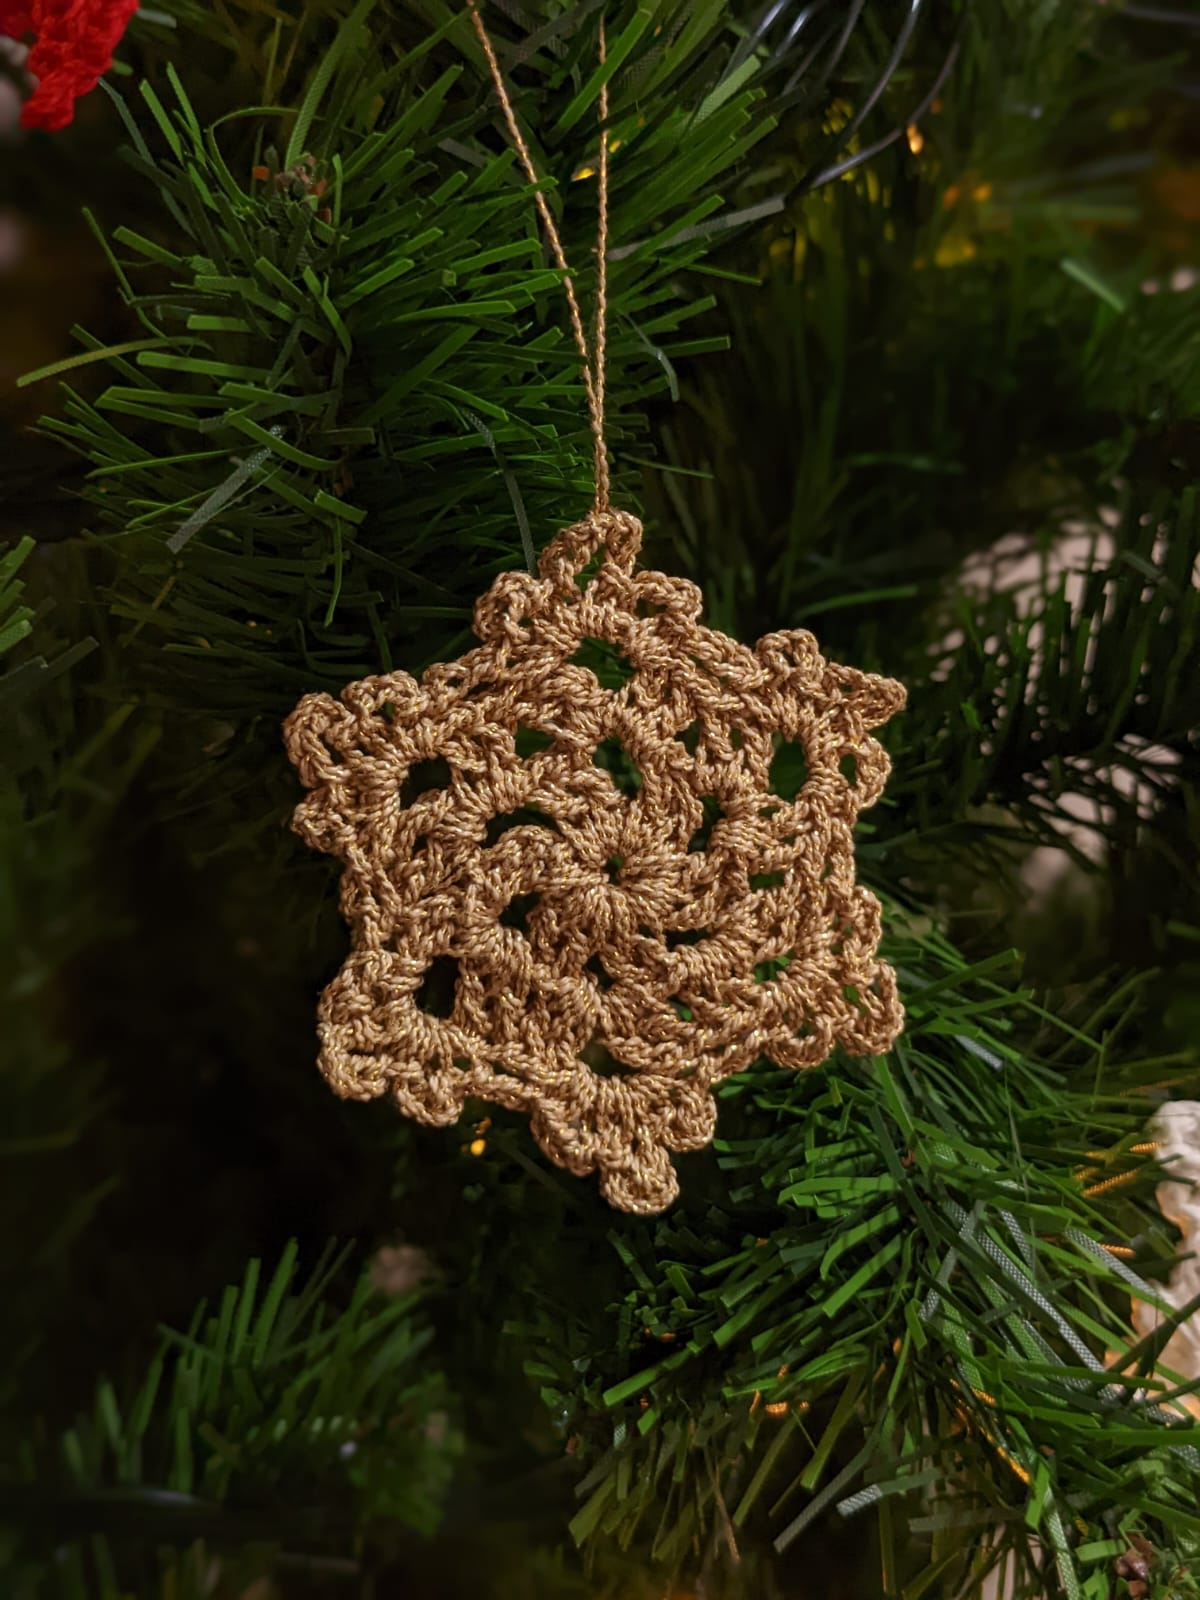 Crochet Snowflakes - set of 3